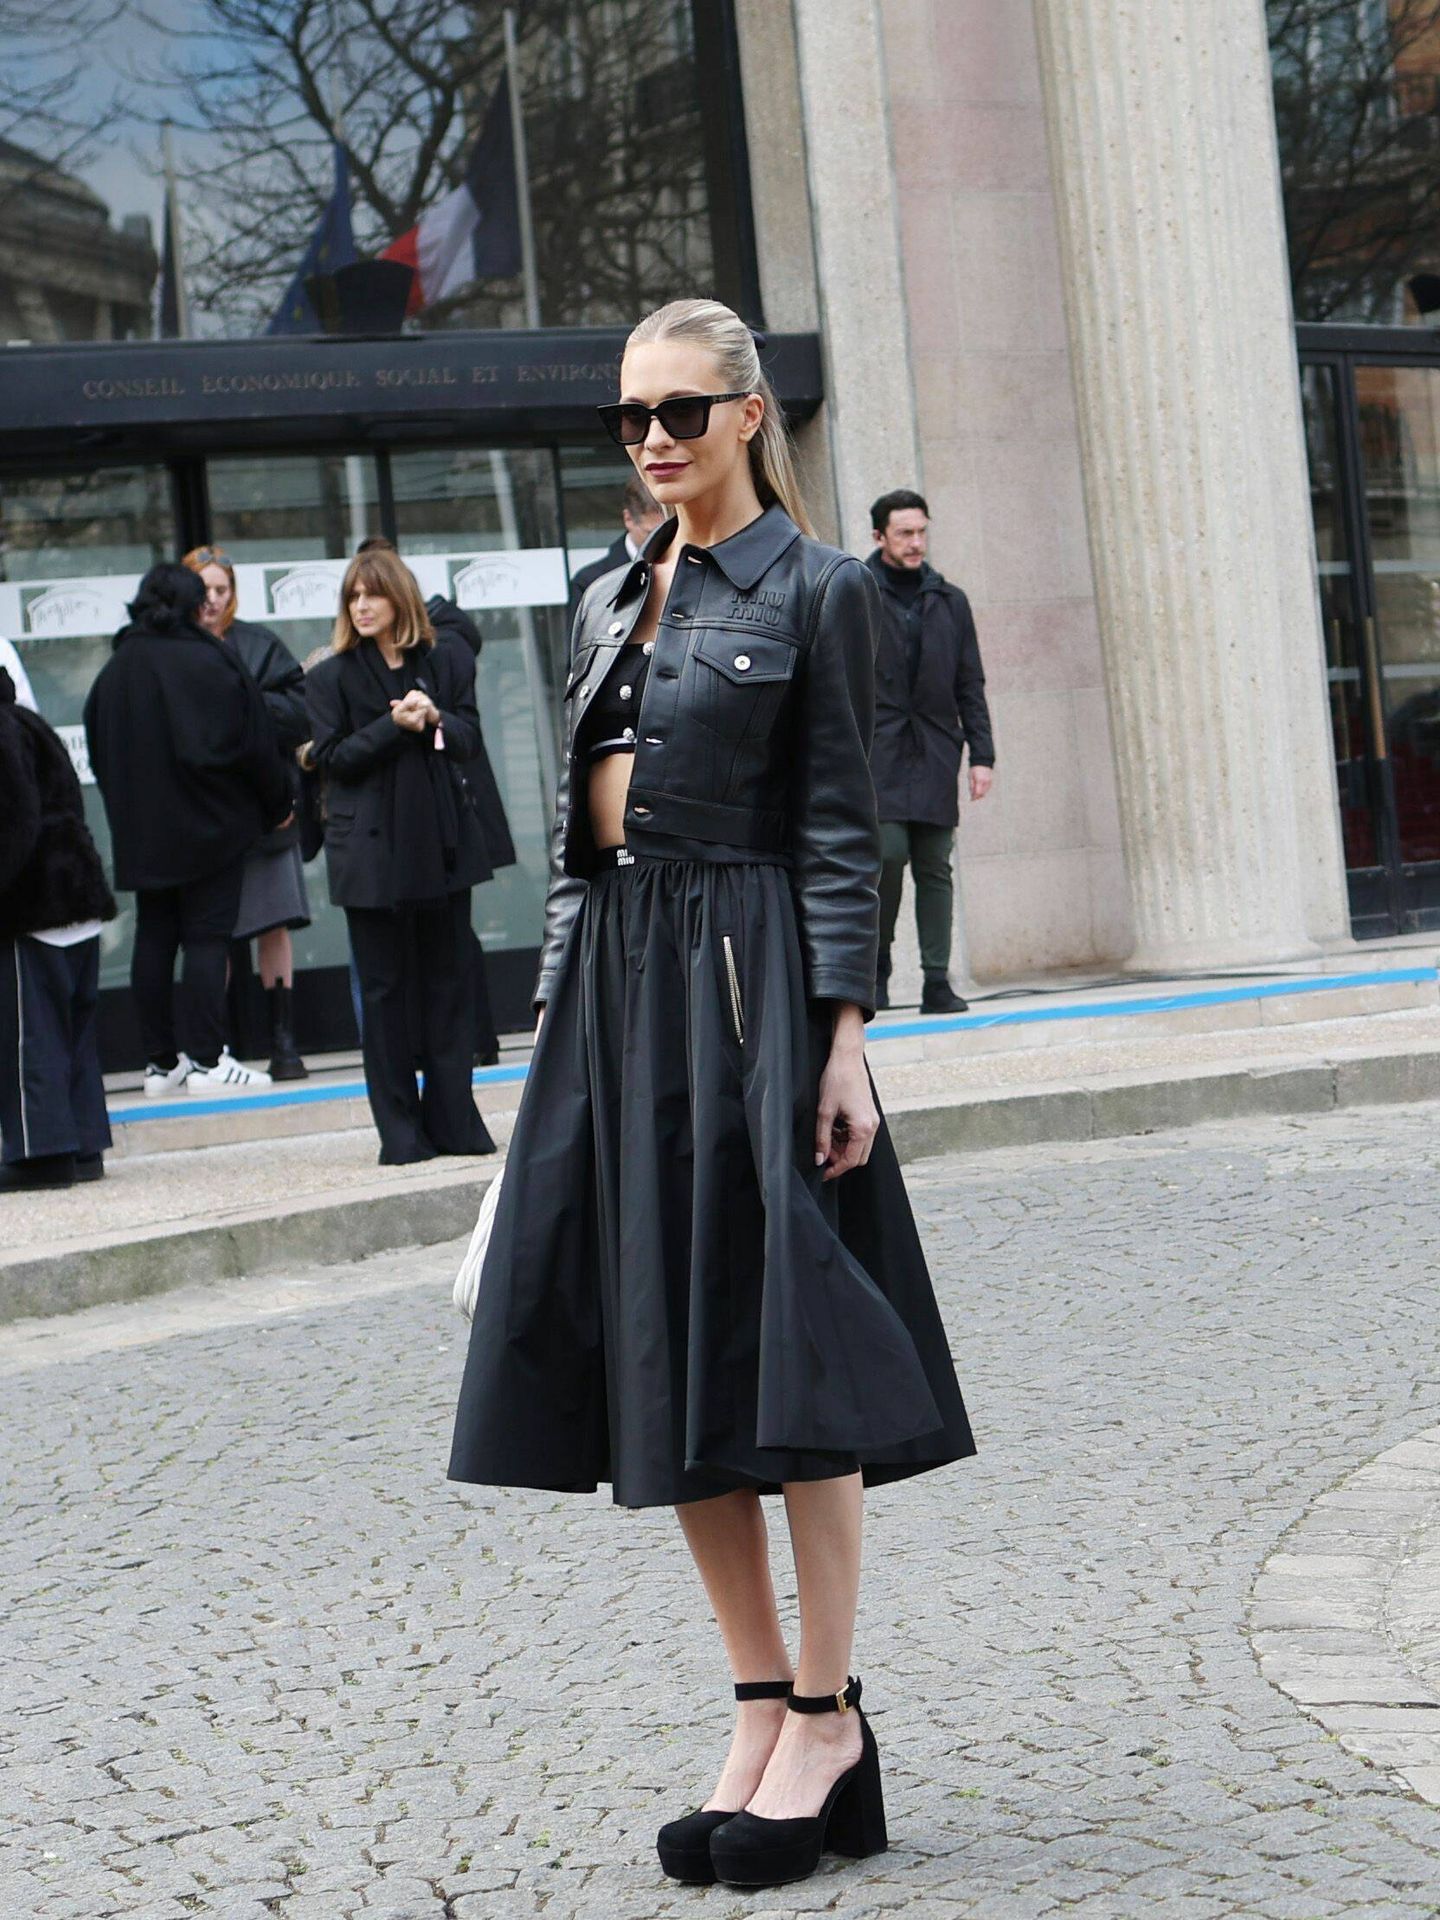 La modelo británica Poppy Delevingne en el street style. (Getty Images)